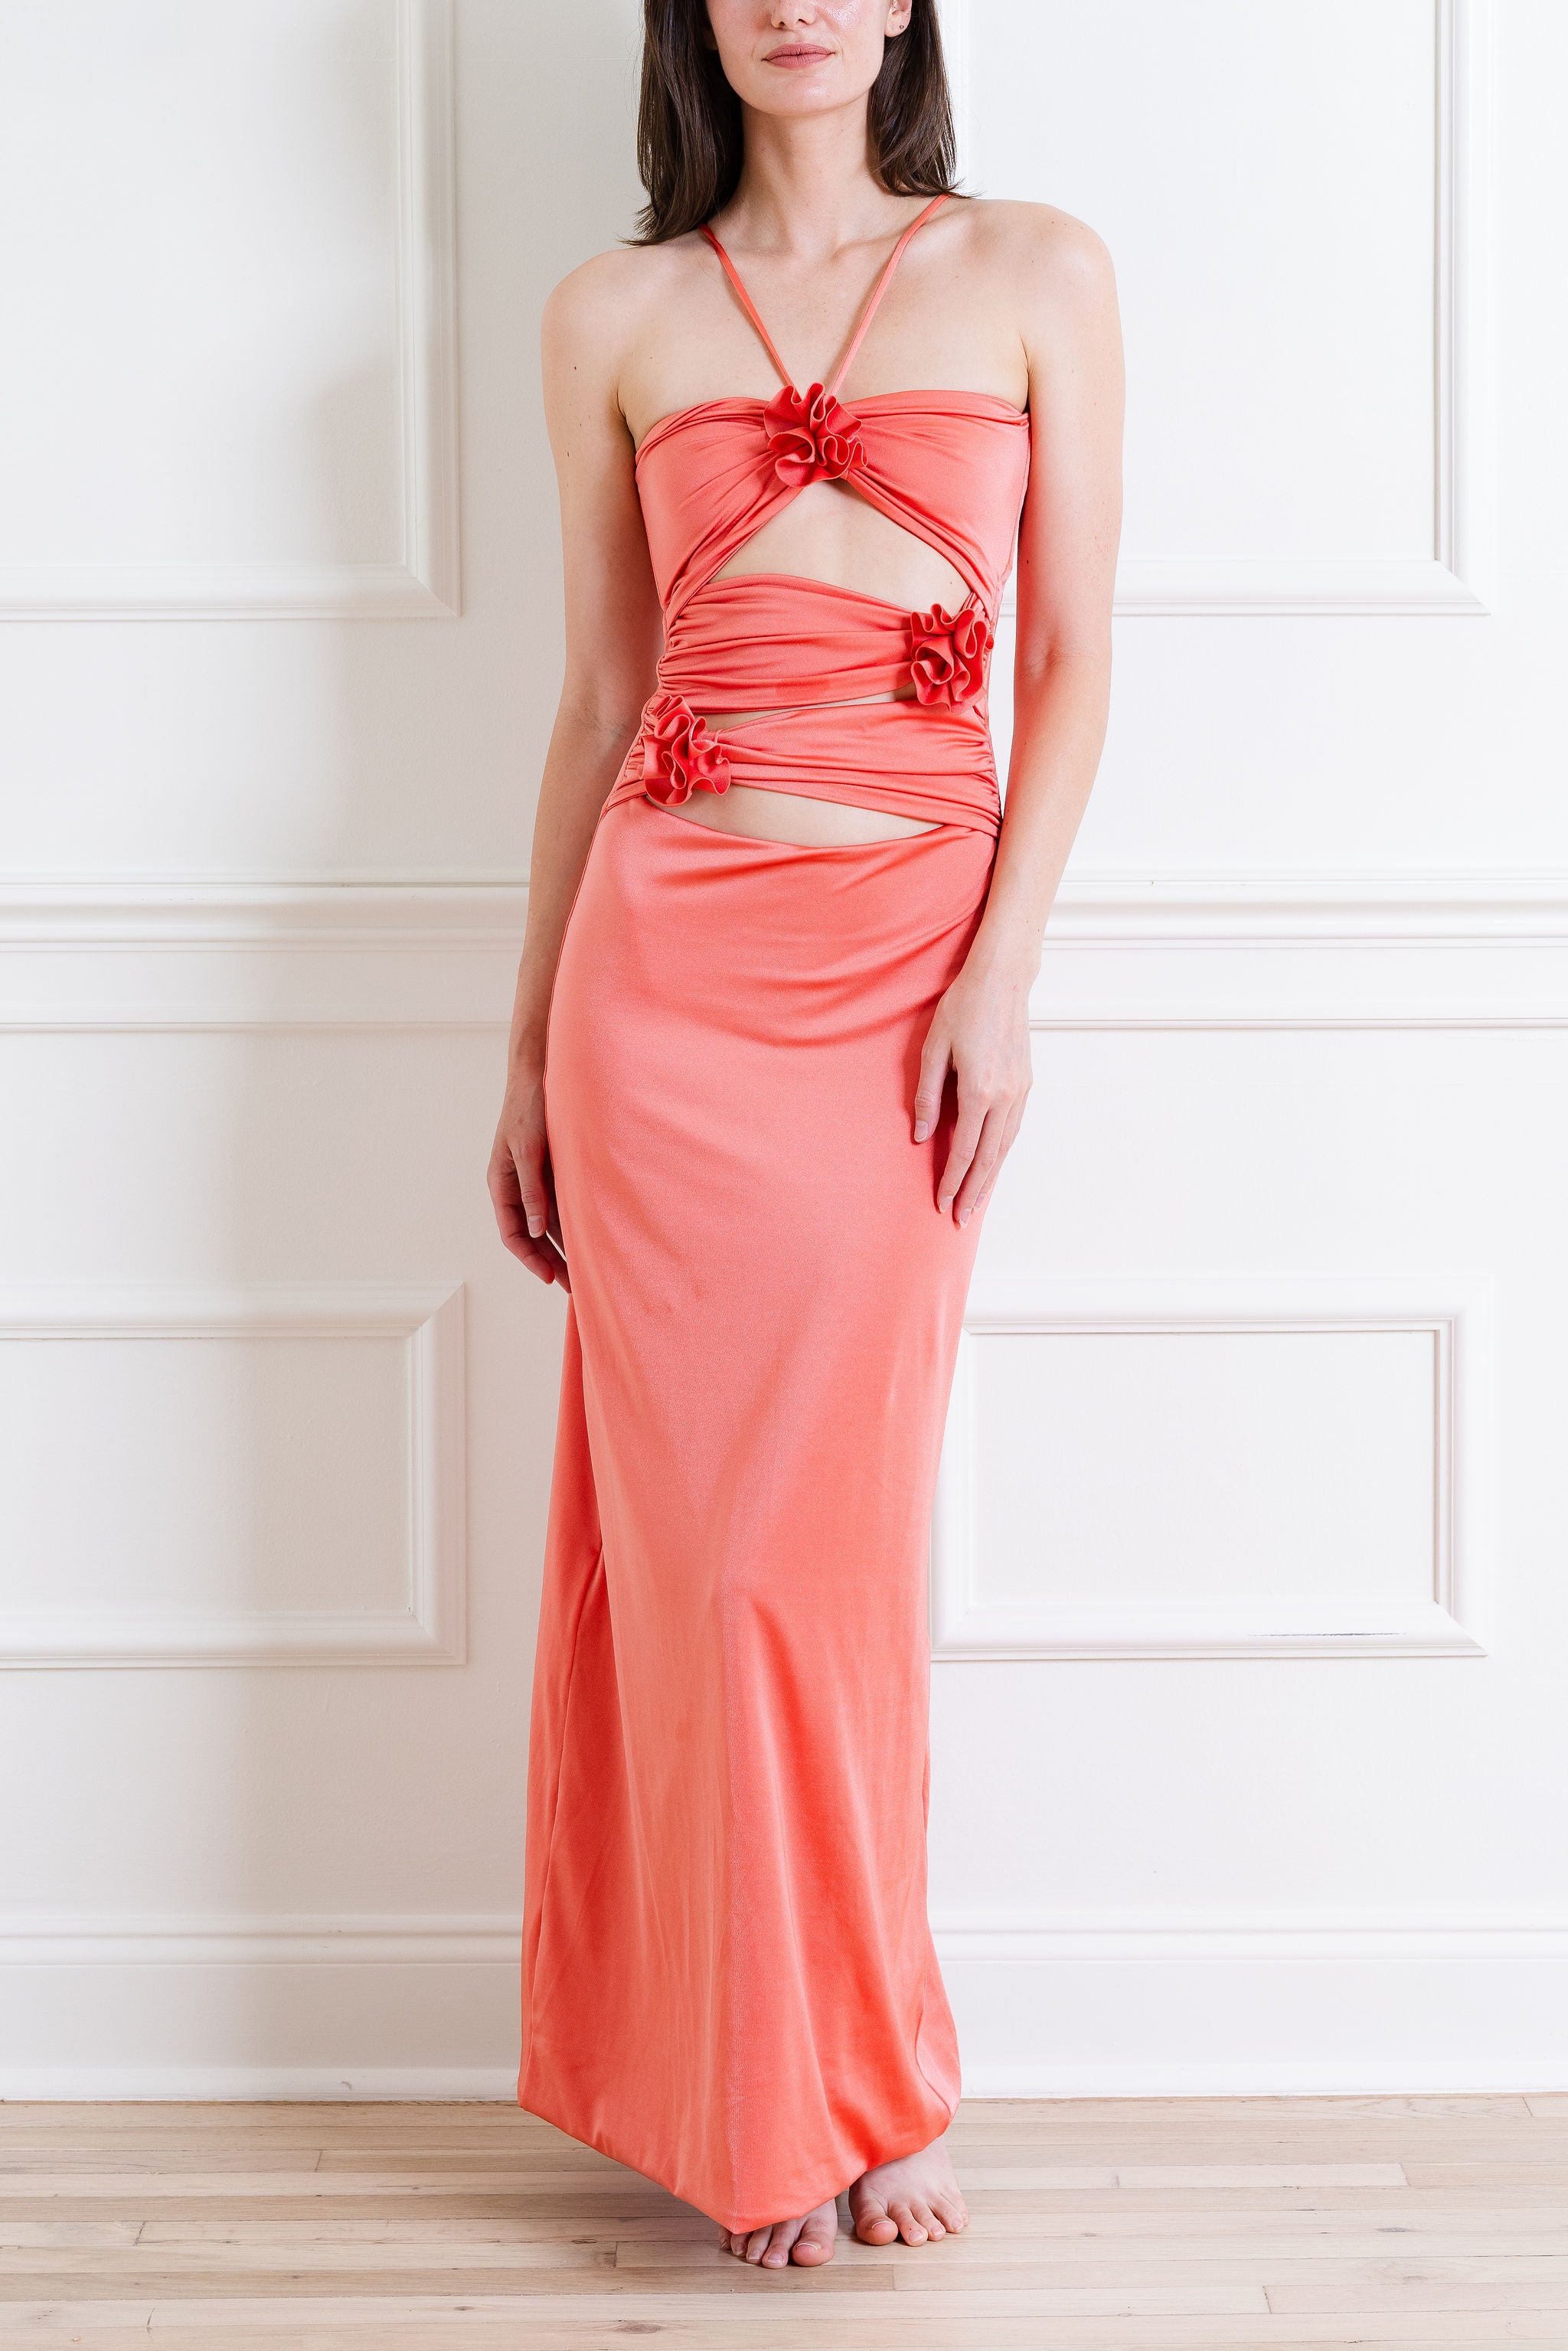 Veranera Fiaba Pink Dress